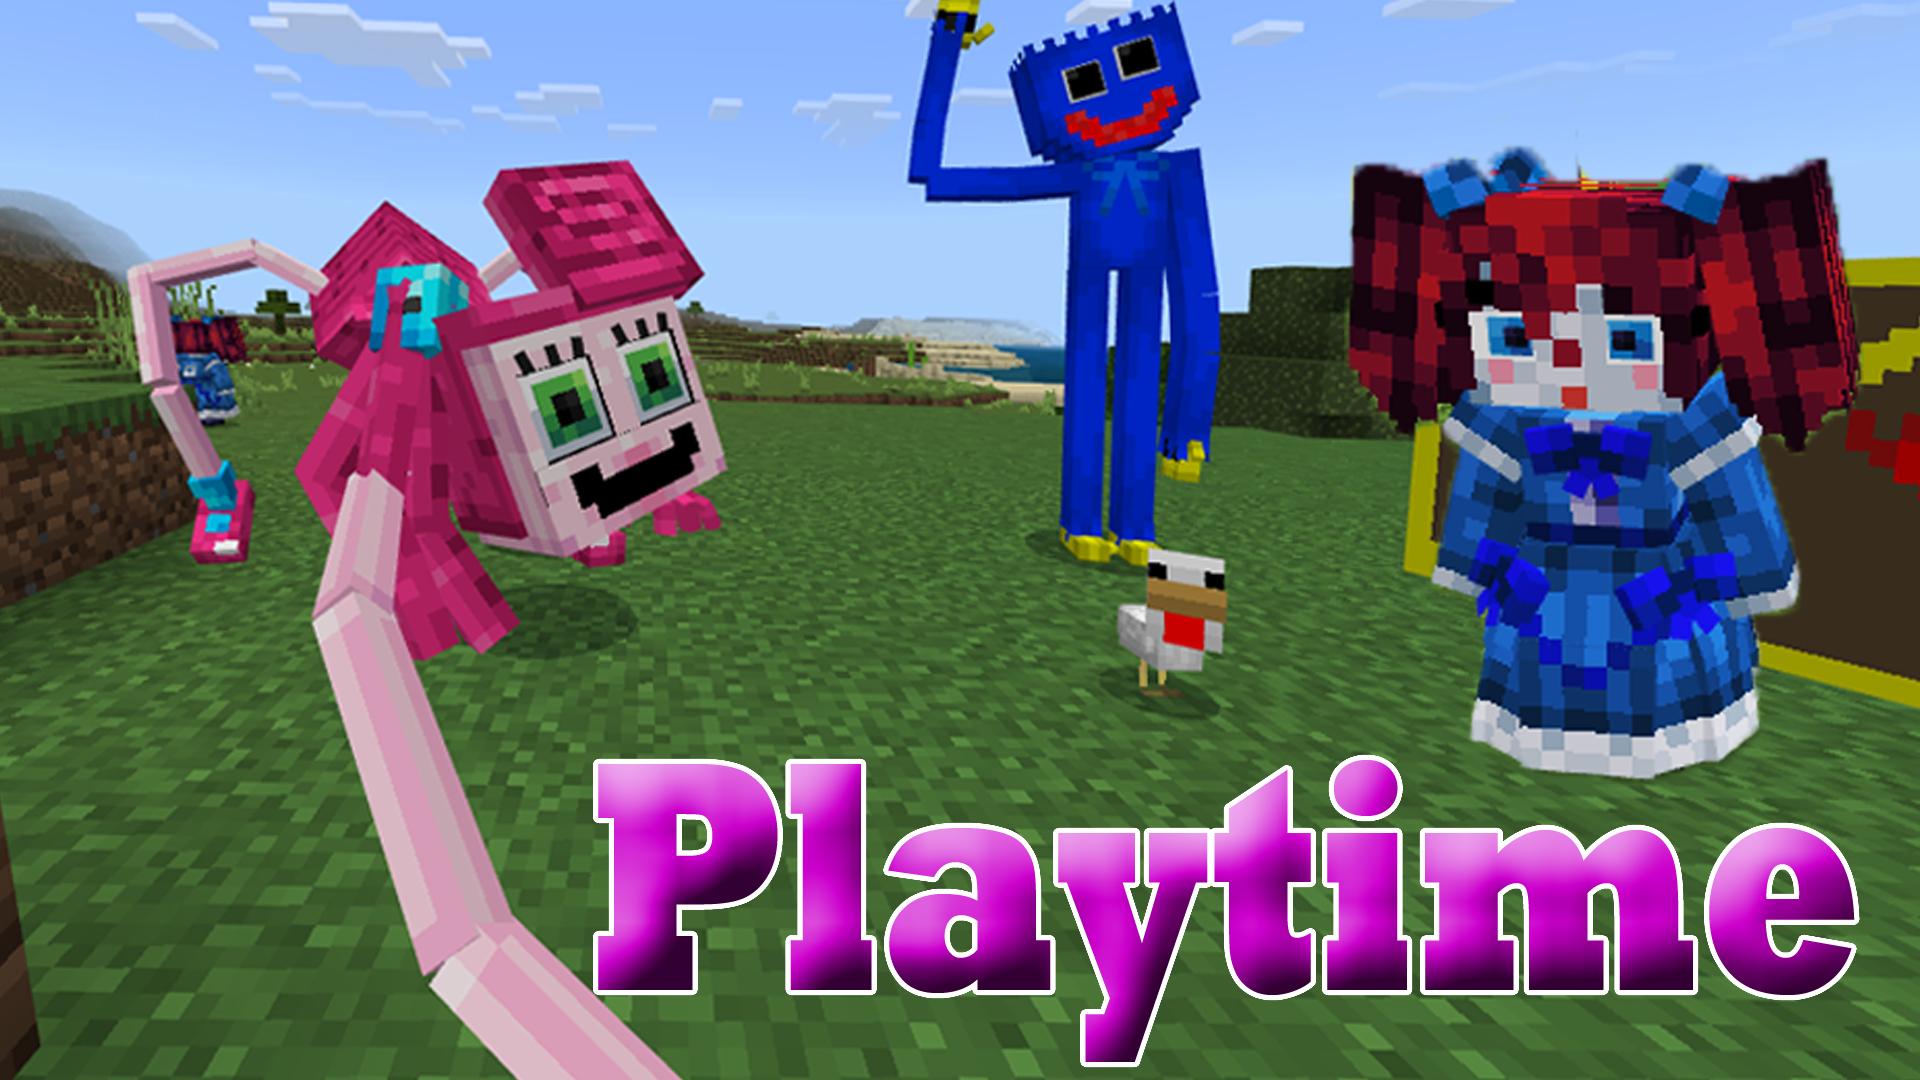 Poppy Minecraft. Майнкрафт скин Poppy Playtime 3. Человечек из Poppy Playtime в Minecraft. Poppy Playtime Mod Minecraft pe by Bbendy.